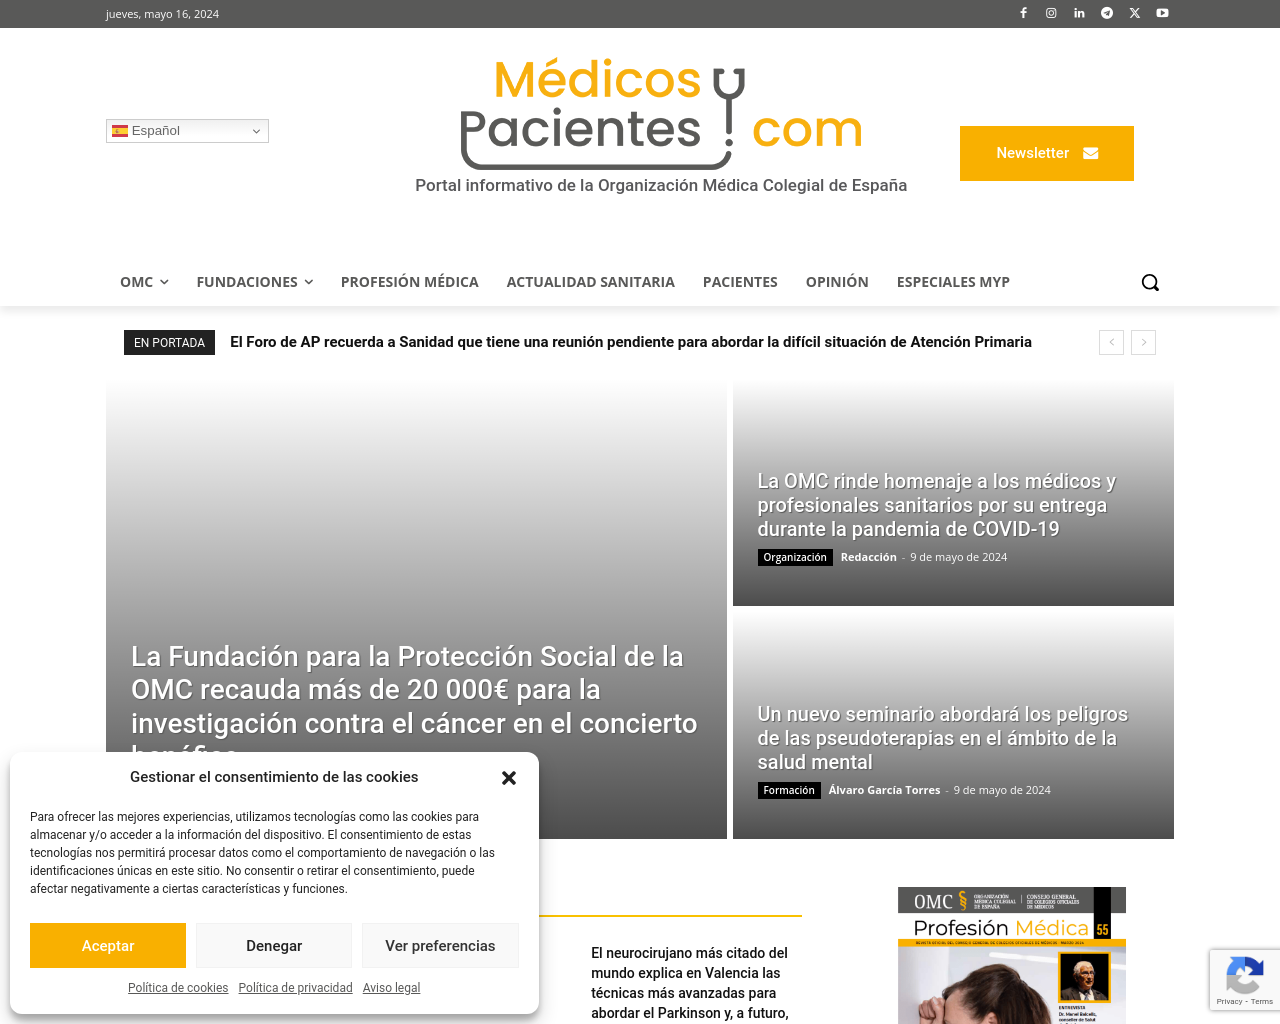 medicosypacientes.com